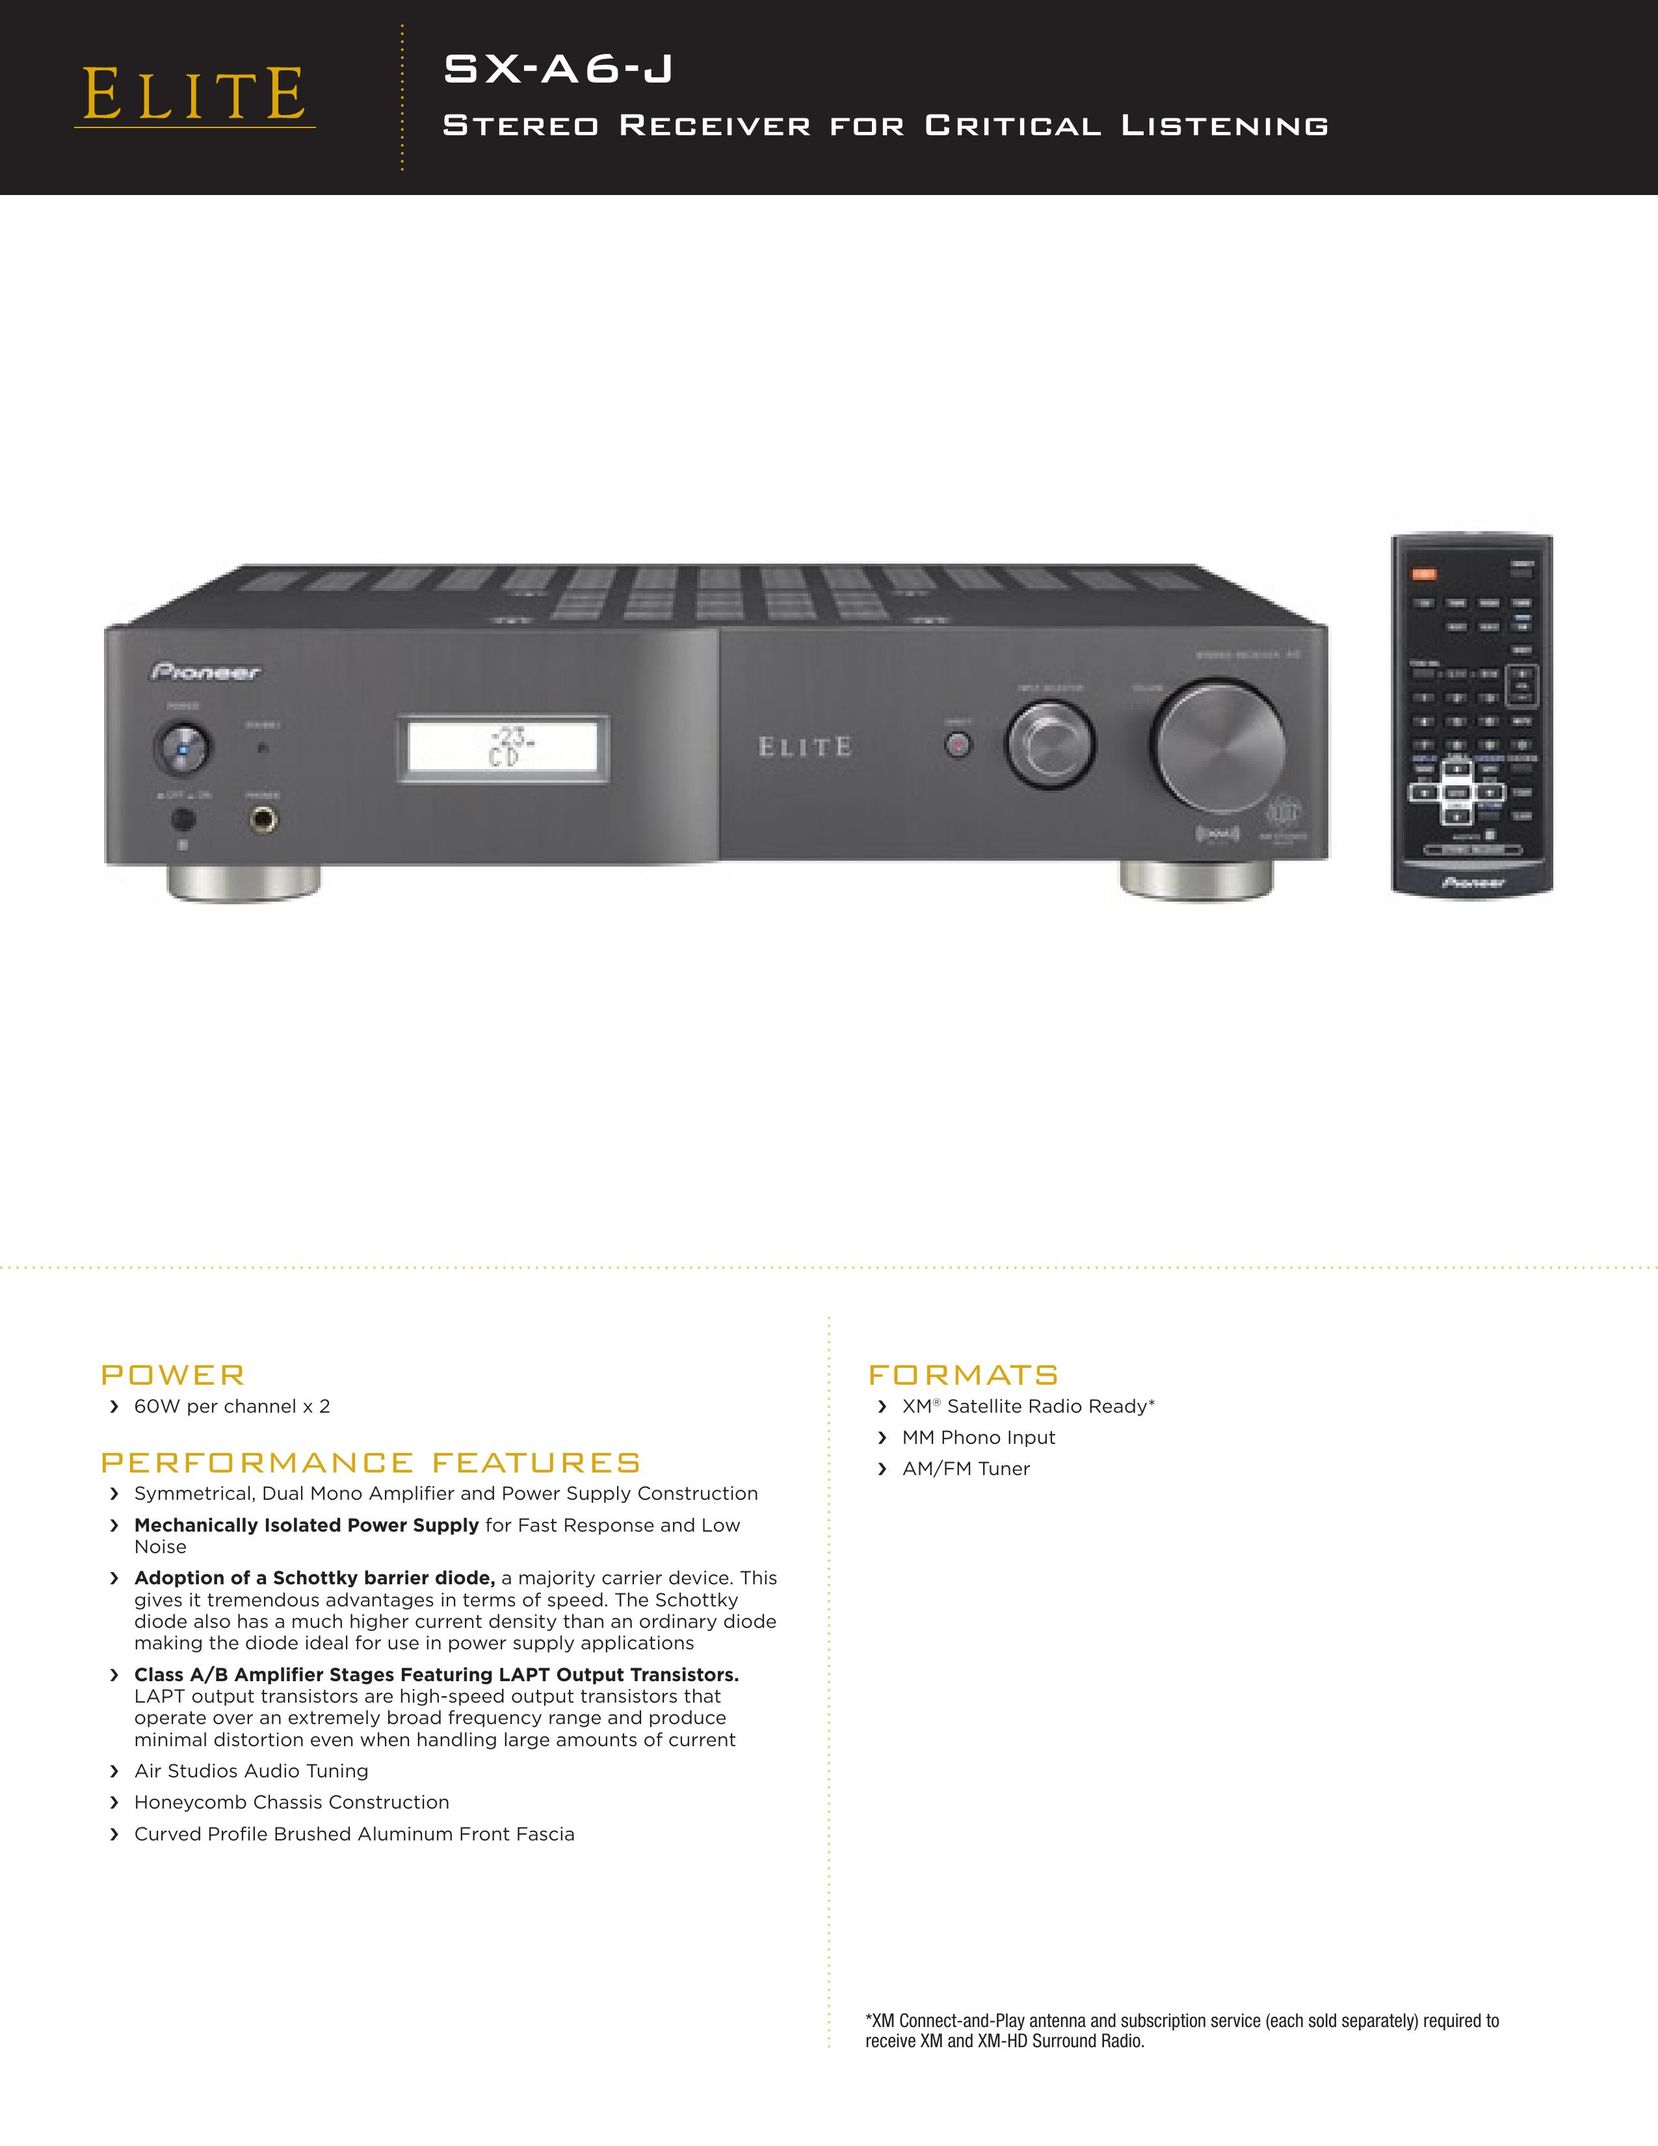 Elite SX-A6-J Stereo Receiver User Manual